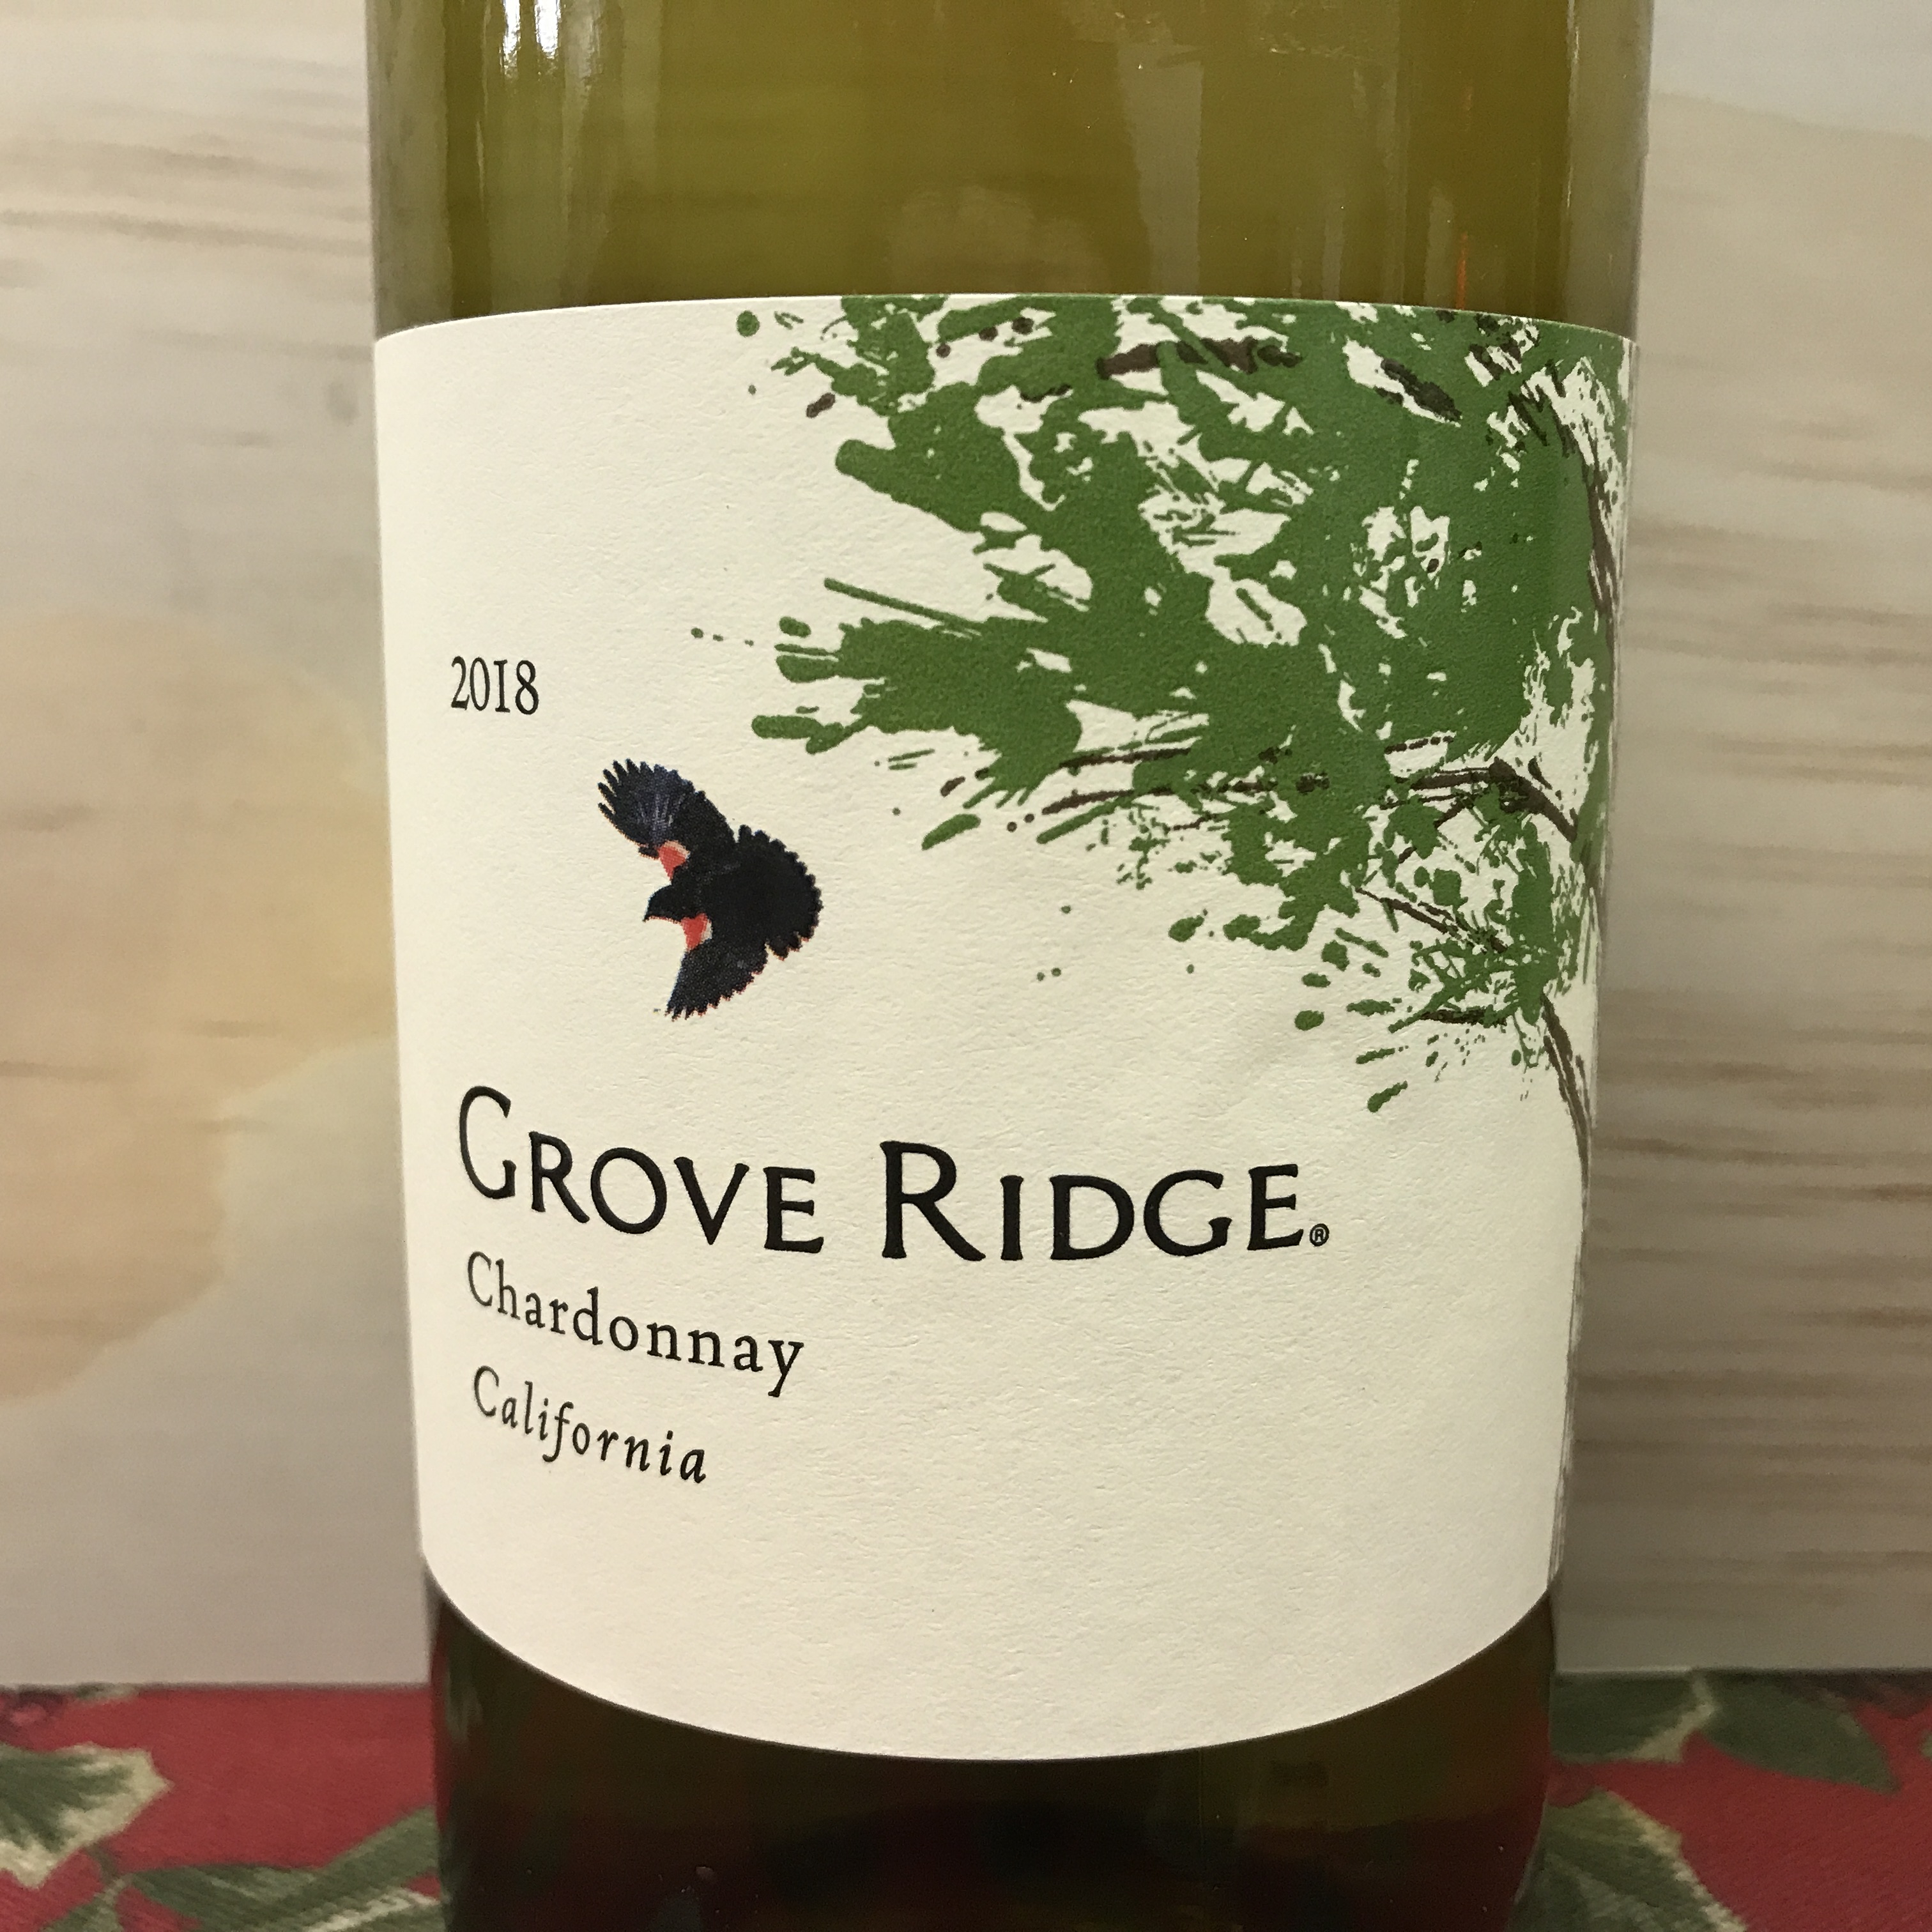 Grove Ridge California Chardonnay 2018